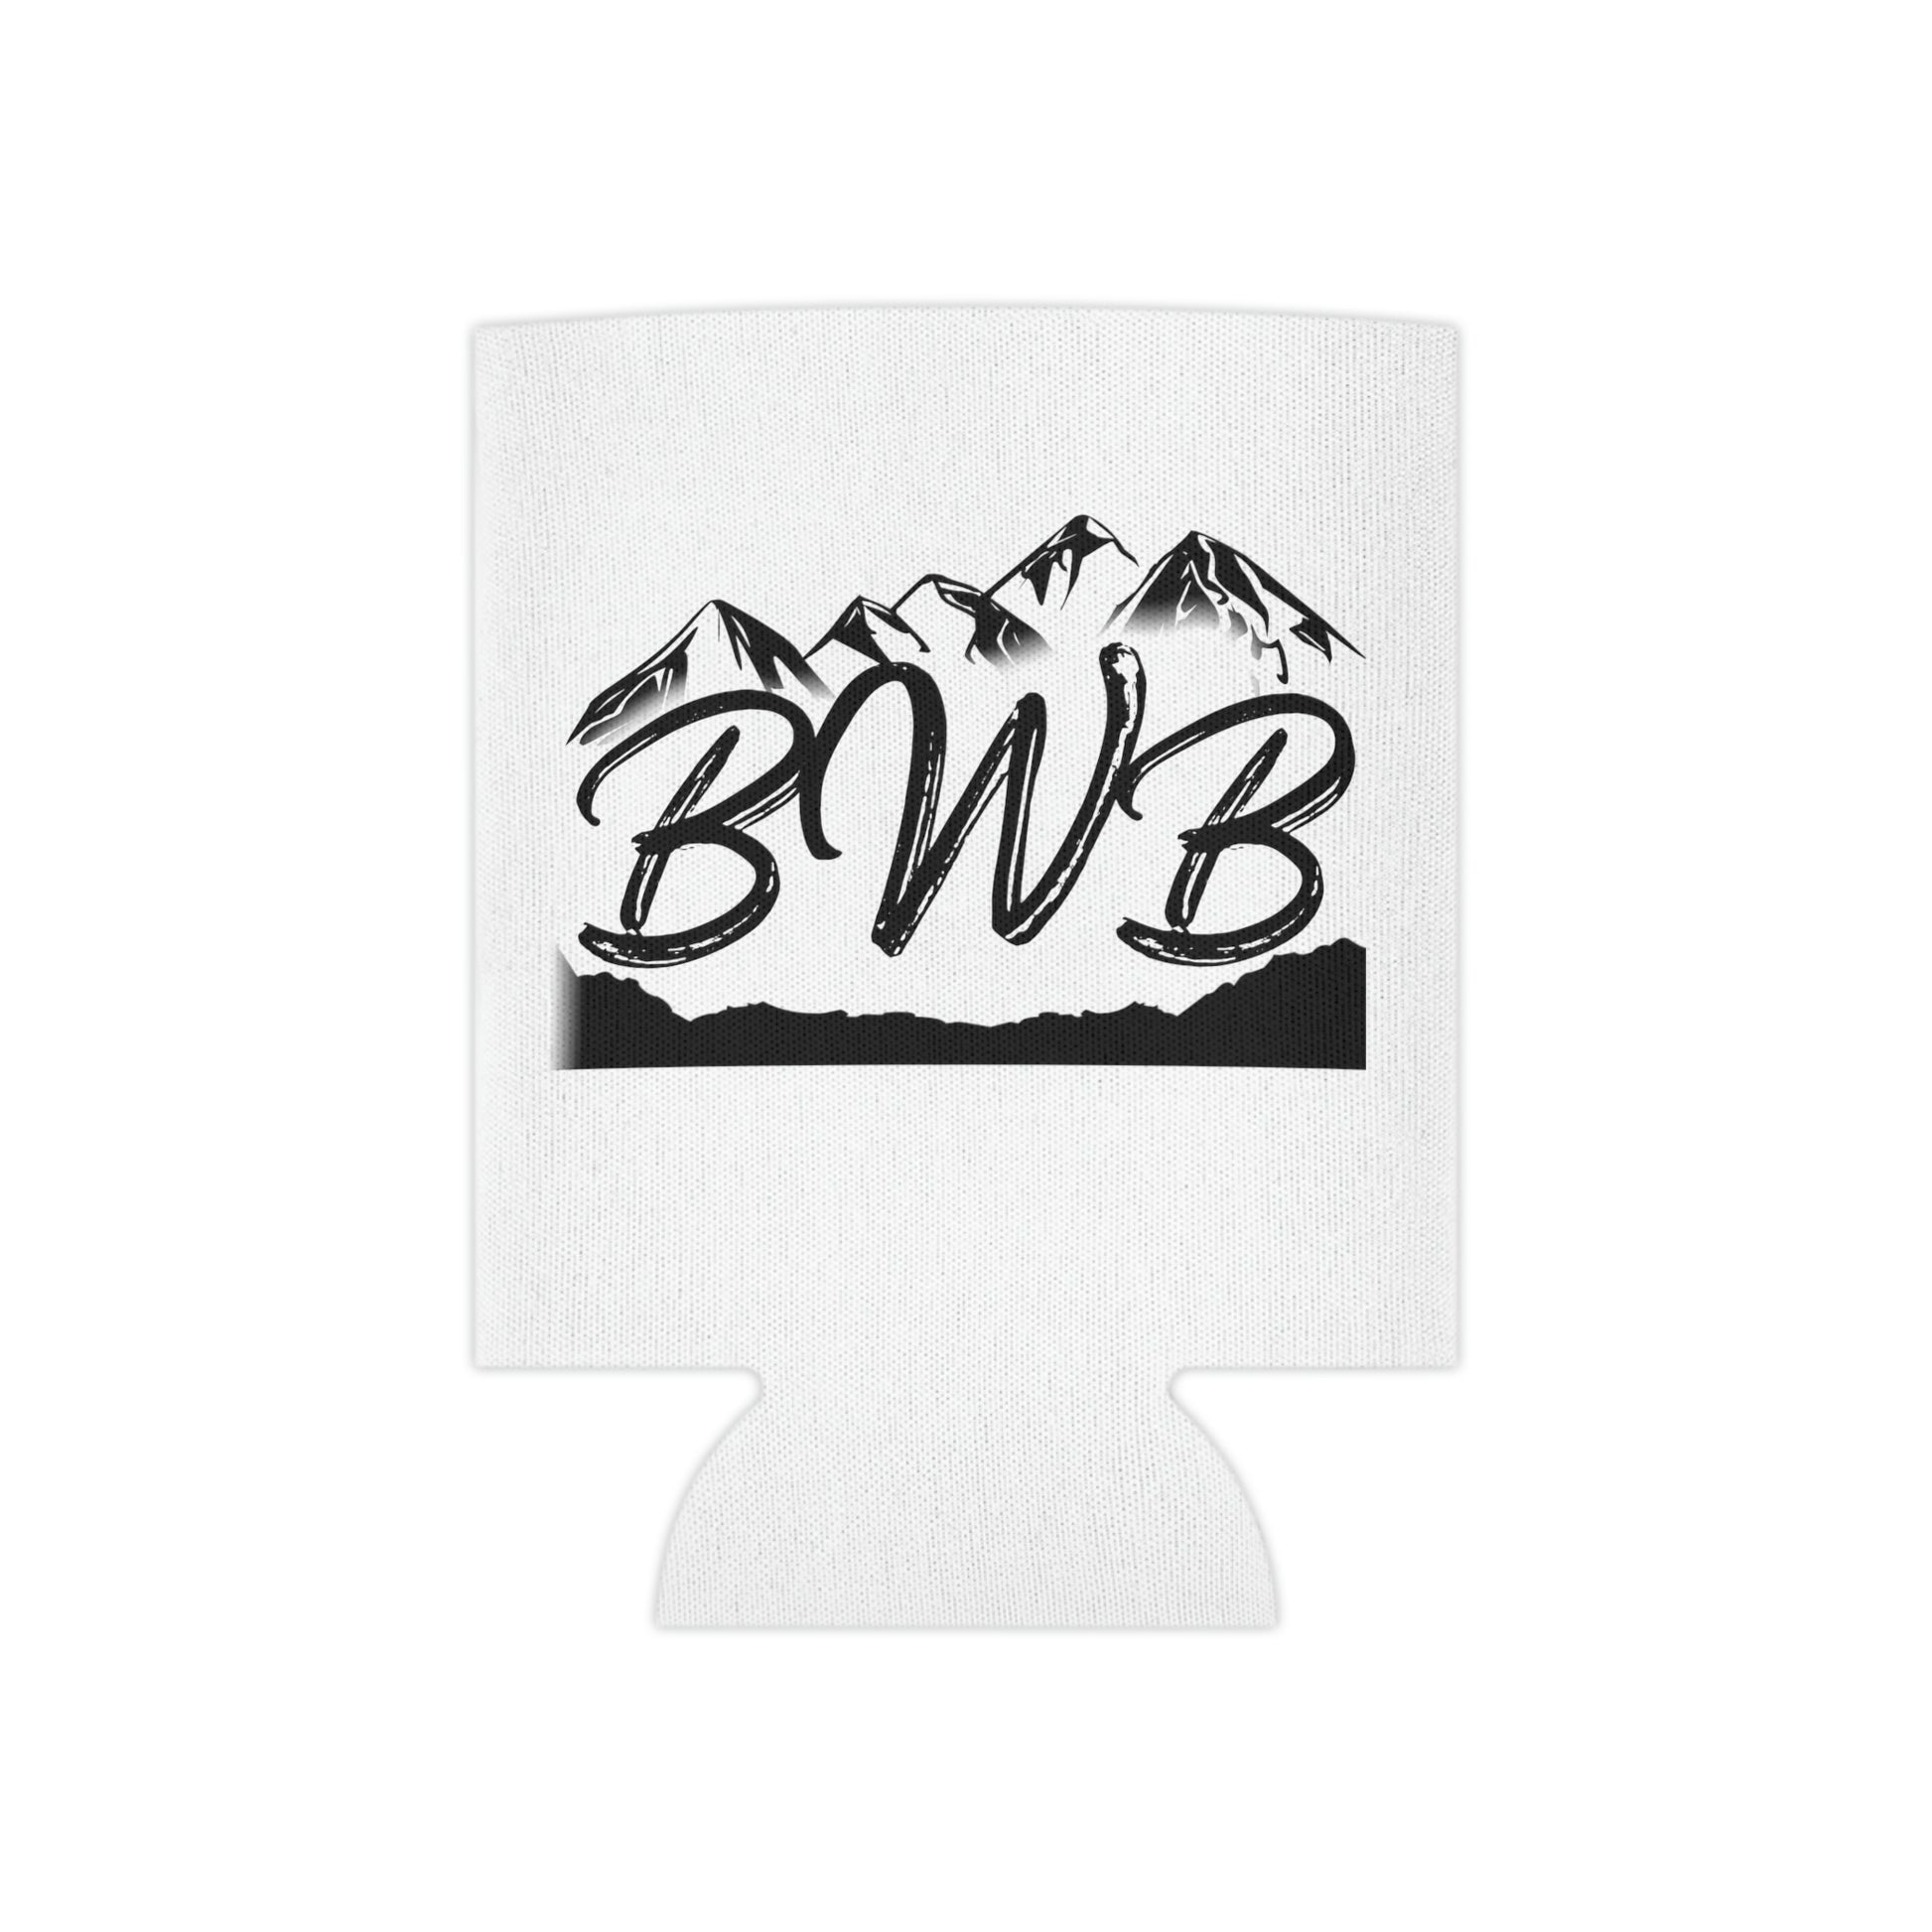 BWB Coozie - Backwoods Branding Co.